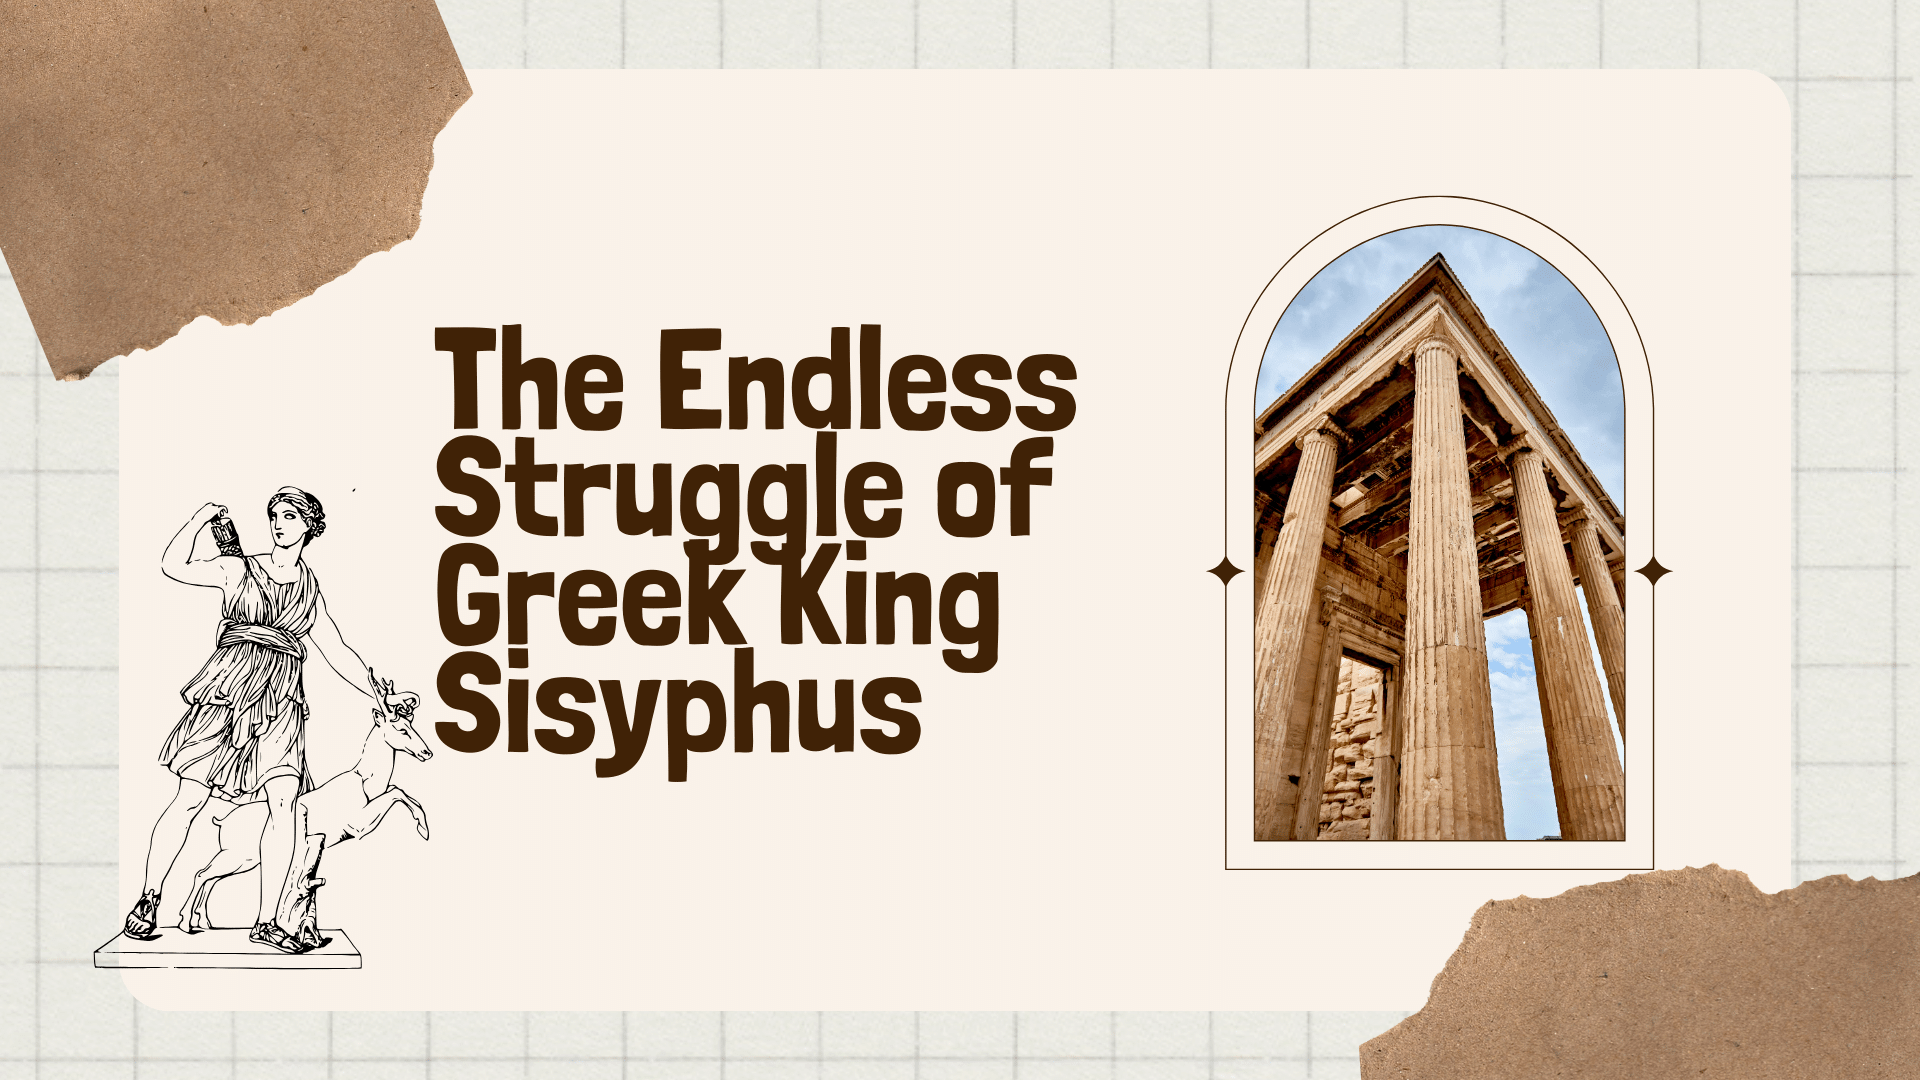 The Endless Struggle of Greek King Sisyphus